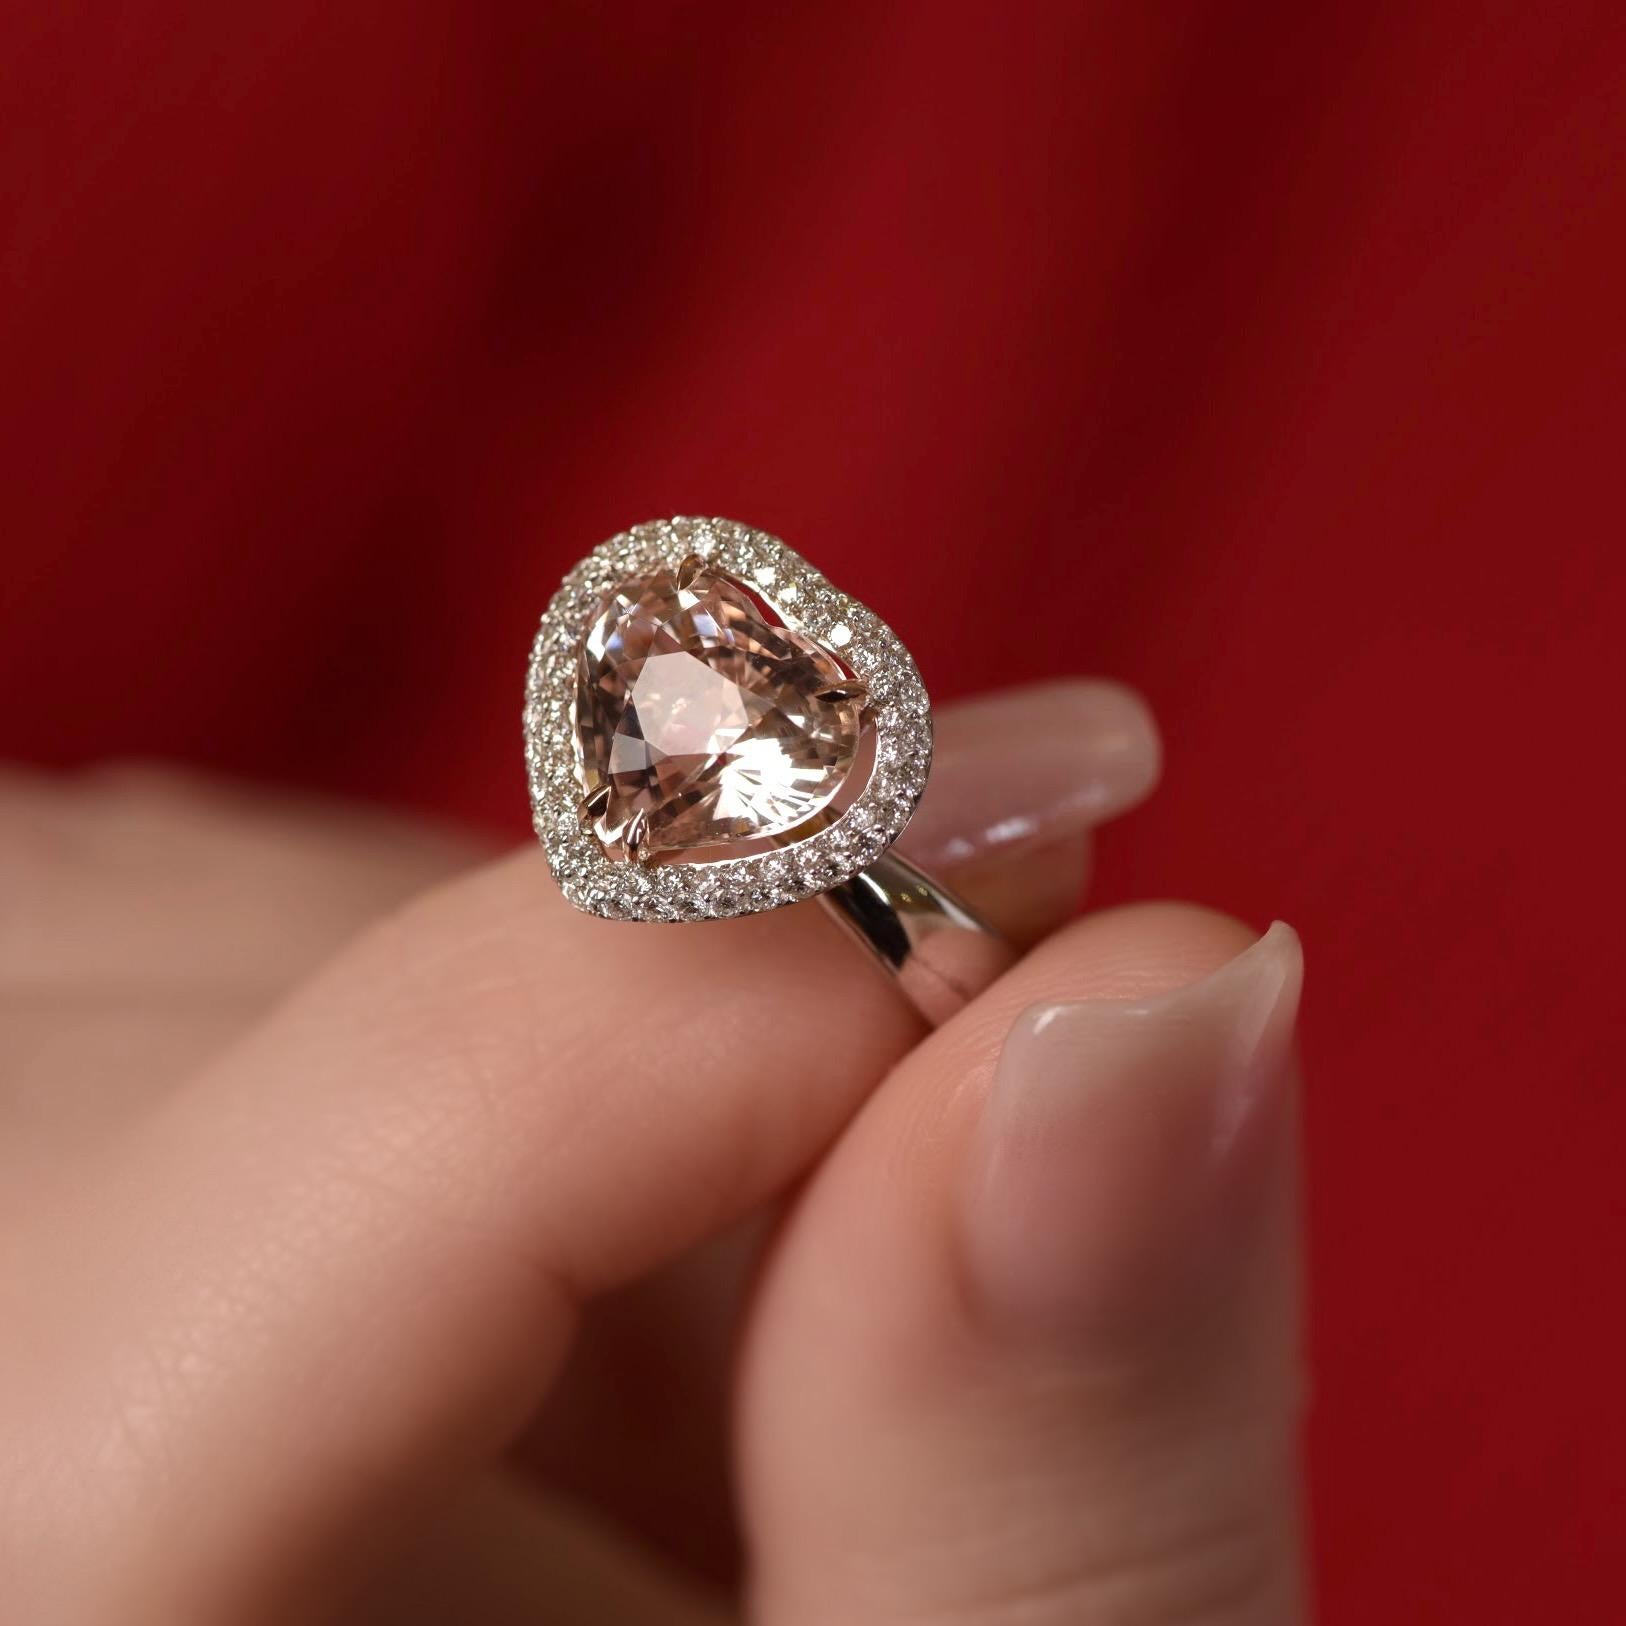 2.5 carat heart shaped diamond ring